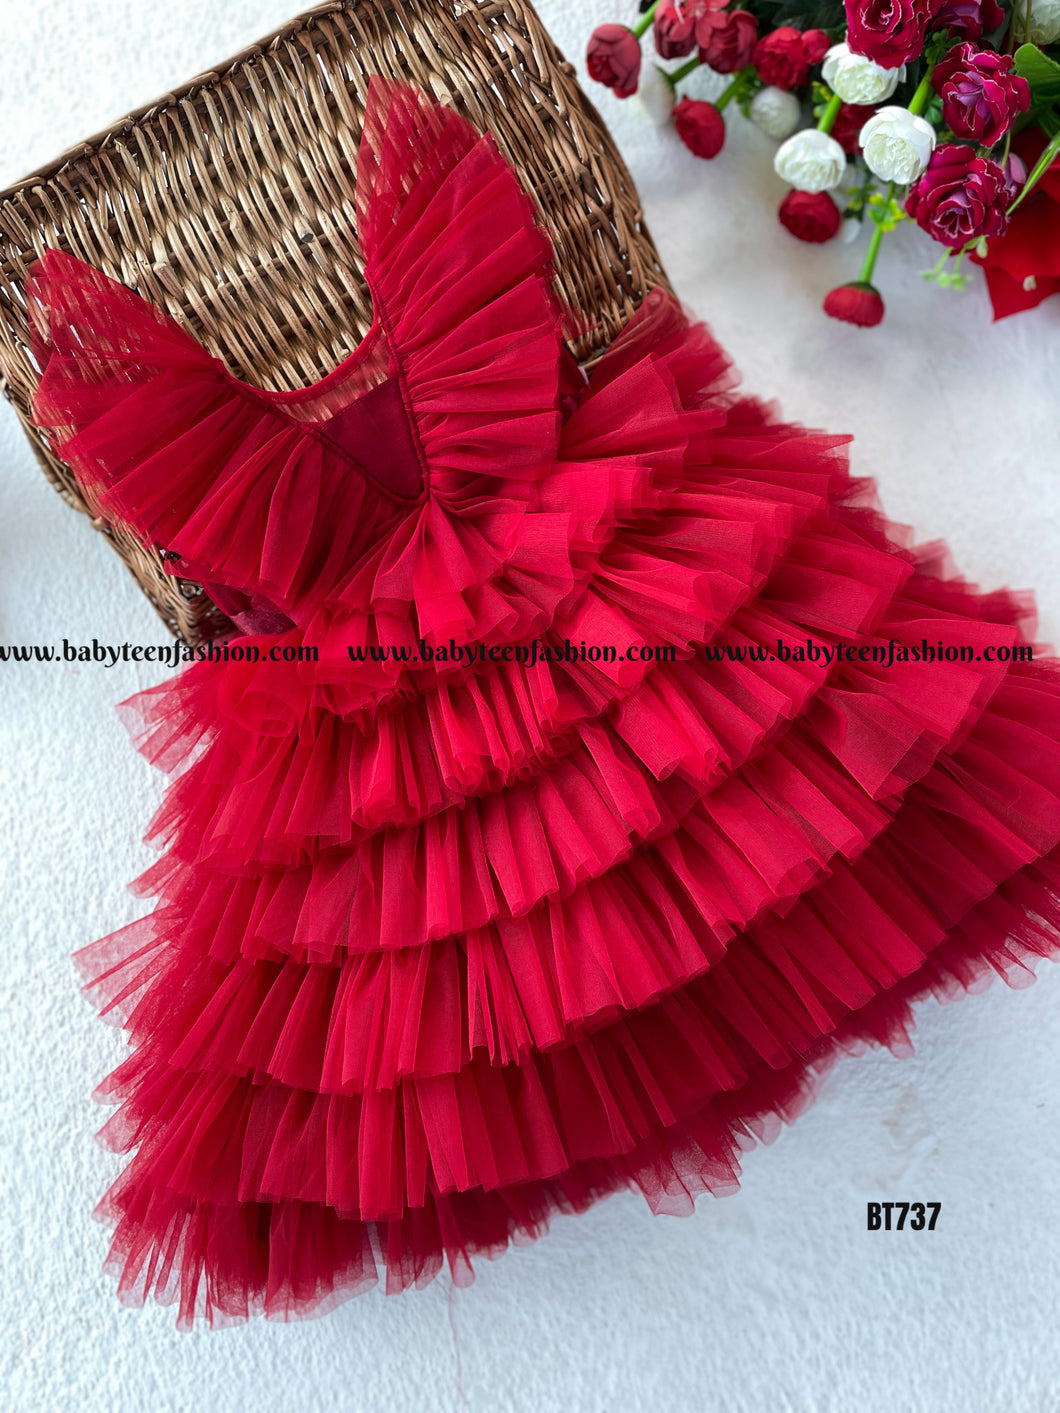 BT737 Radiant Red Ruffle Dress – A Cascade of Charm